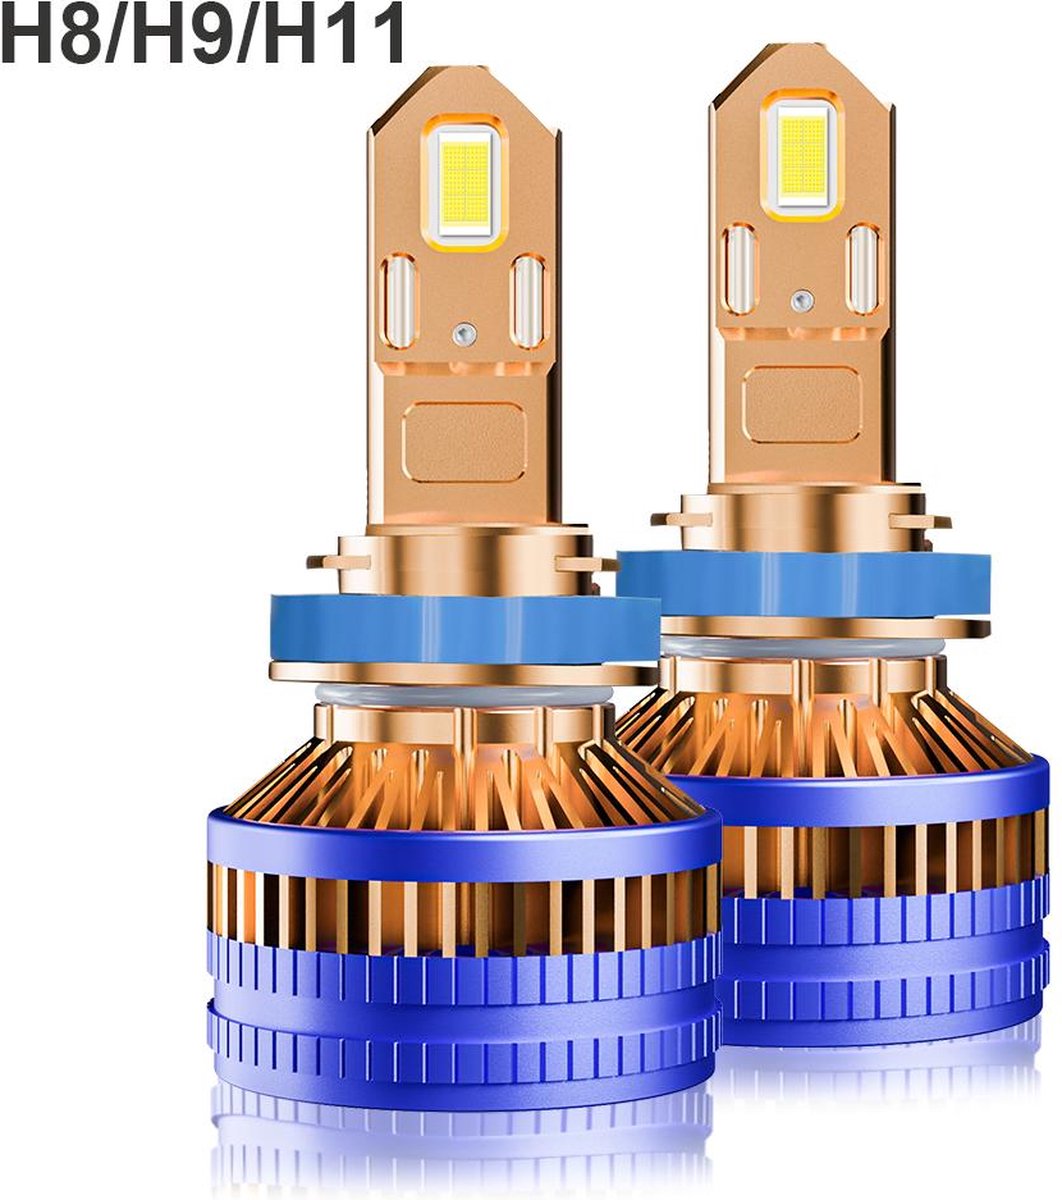 TLVX H11 Ultra High Power LED – Canbus Proof – 130 watt – 48000 Lumen - Extreem fel – Koplampen - Dimlicht – Grootlicht - Mistlicht - 12V - 24V - Juist APK lichtbeeld